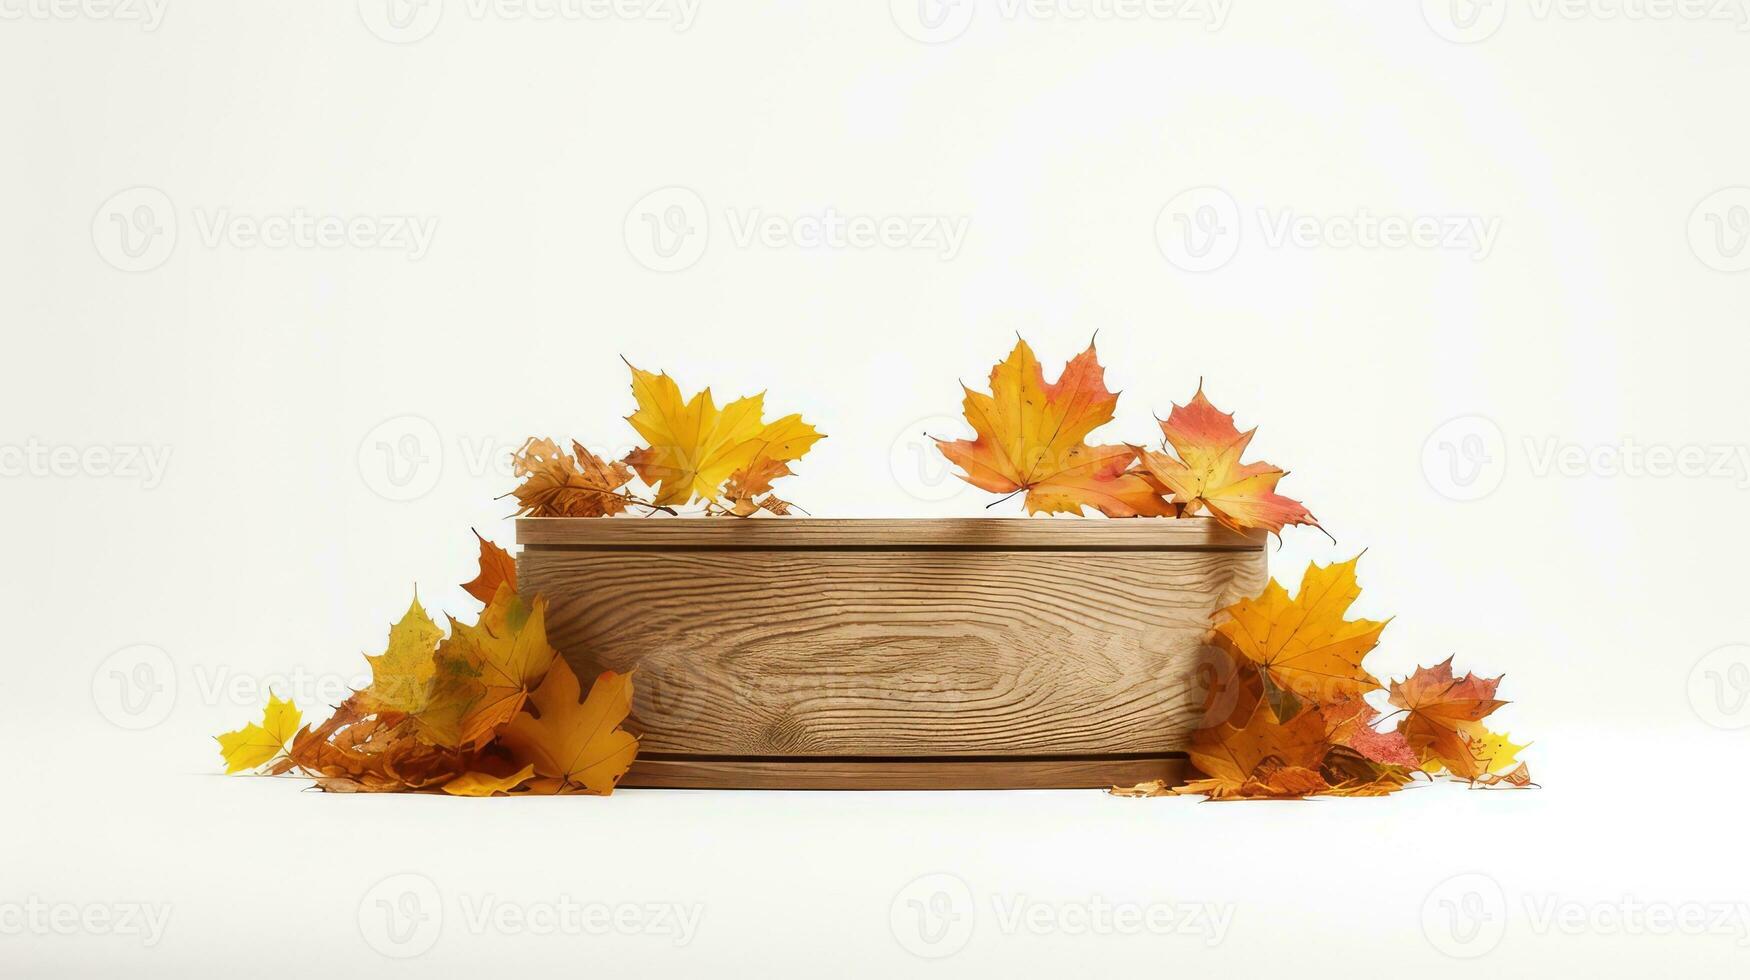 wood pedestal podium on natural dry autumn leaves, minimalist product show case podium. photo